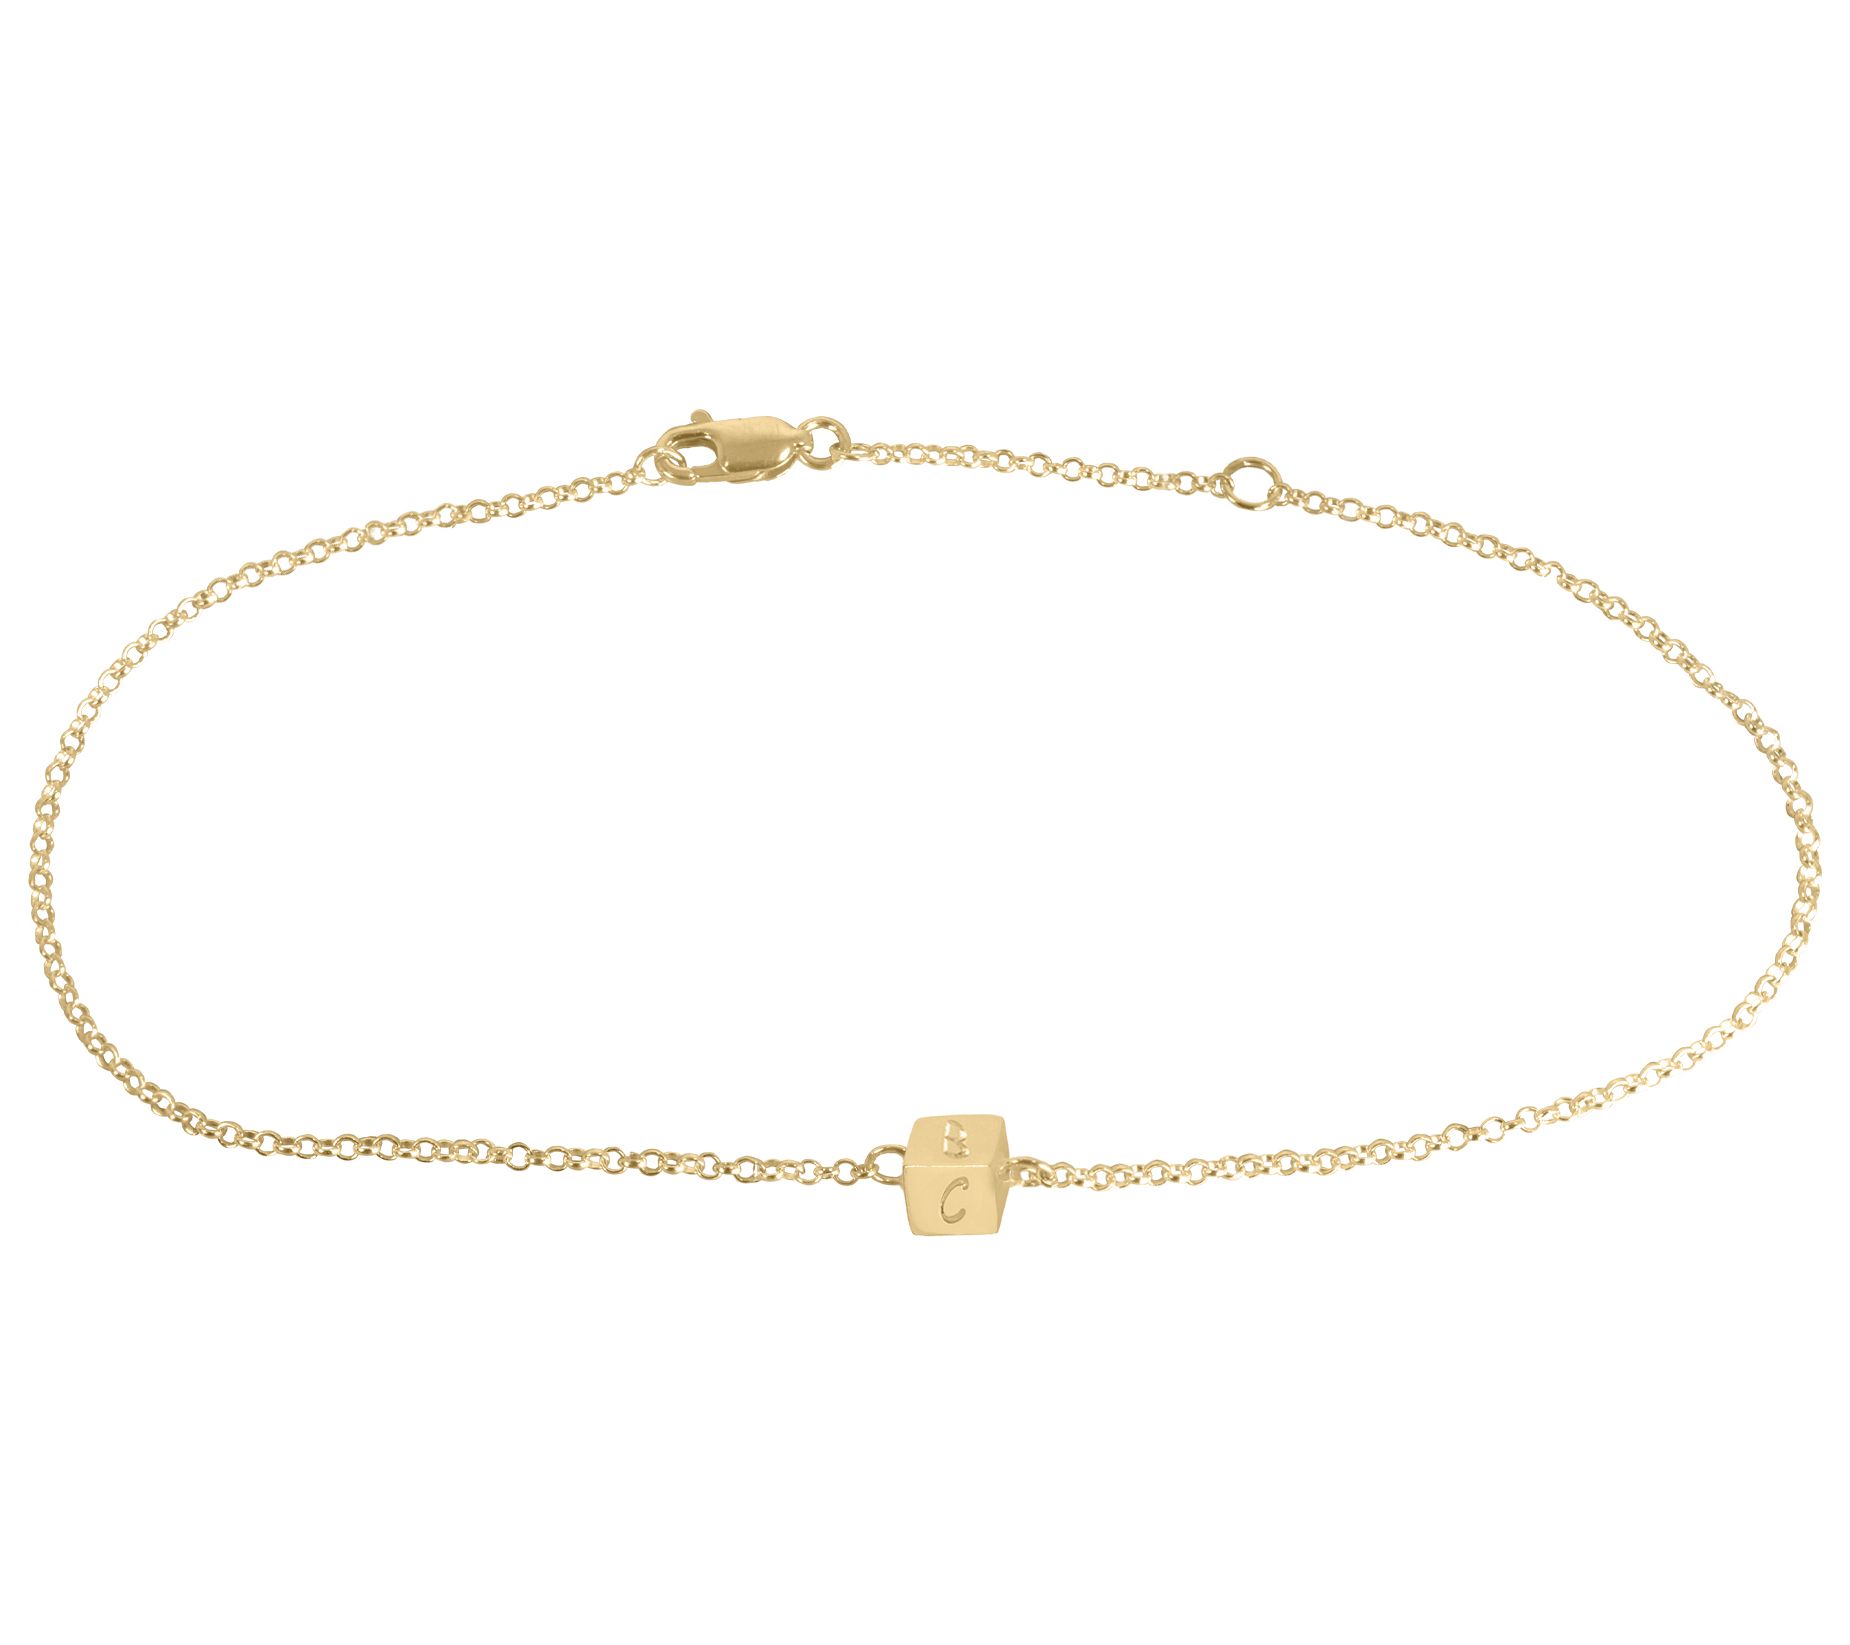 Personalized 14K Gold-Plated Floating Monogram Ankle Bracelet 